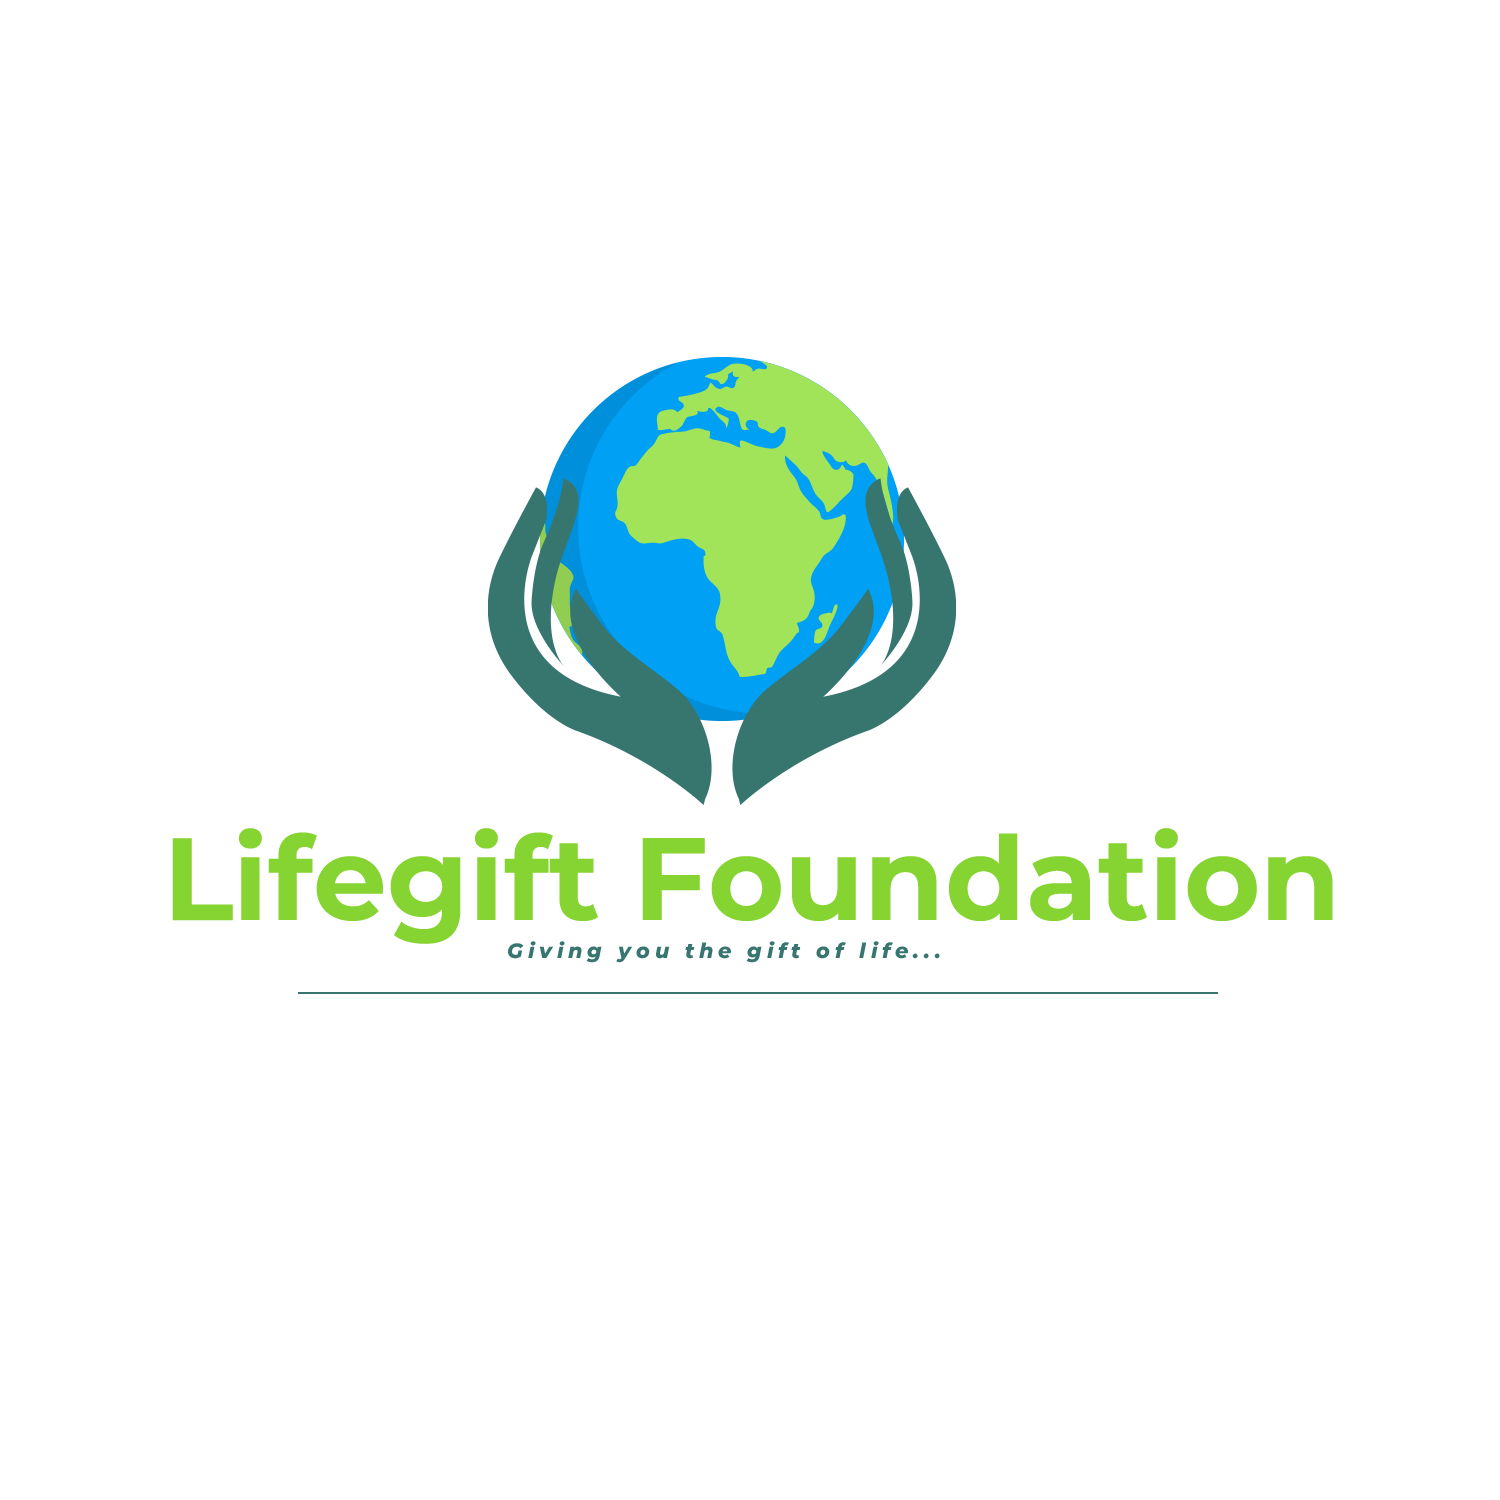 Lifegift Foundation